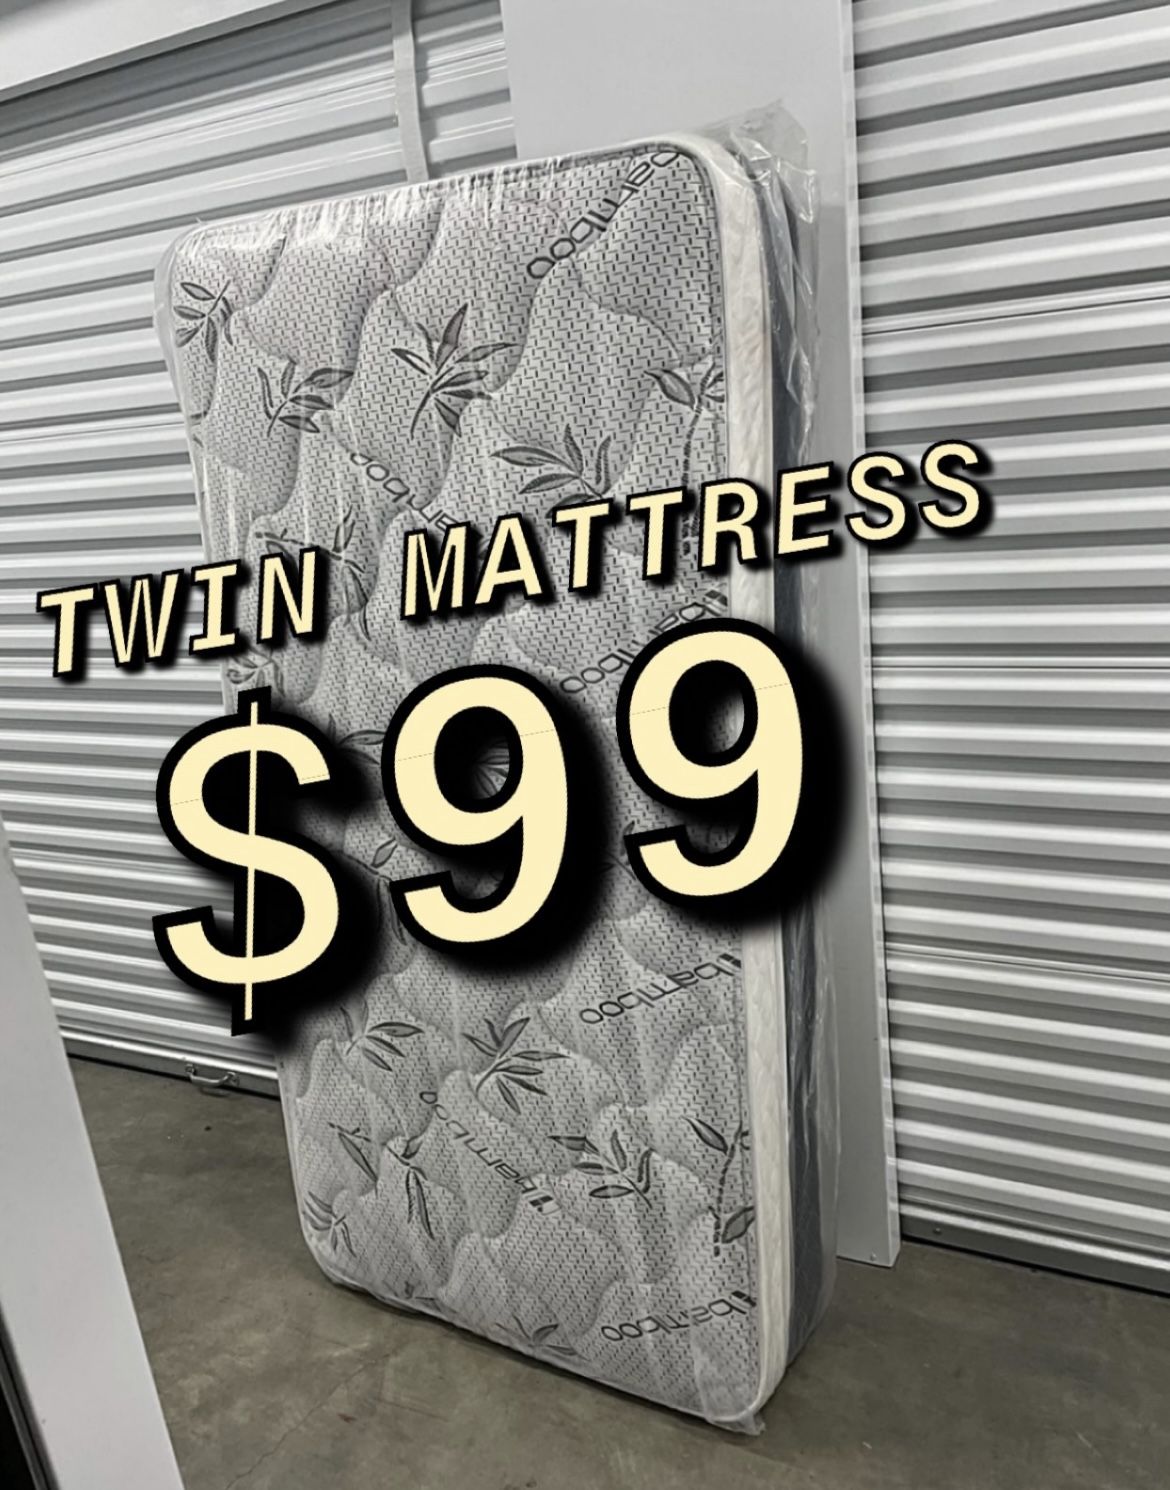 Twin Mattress For $100